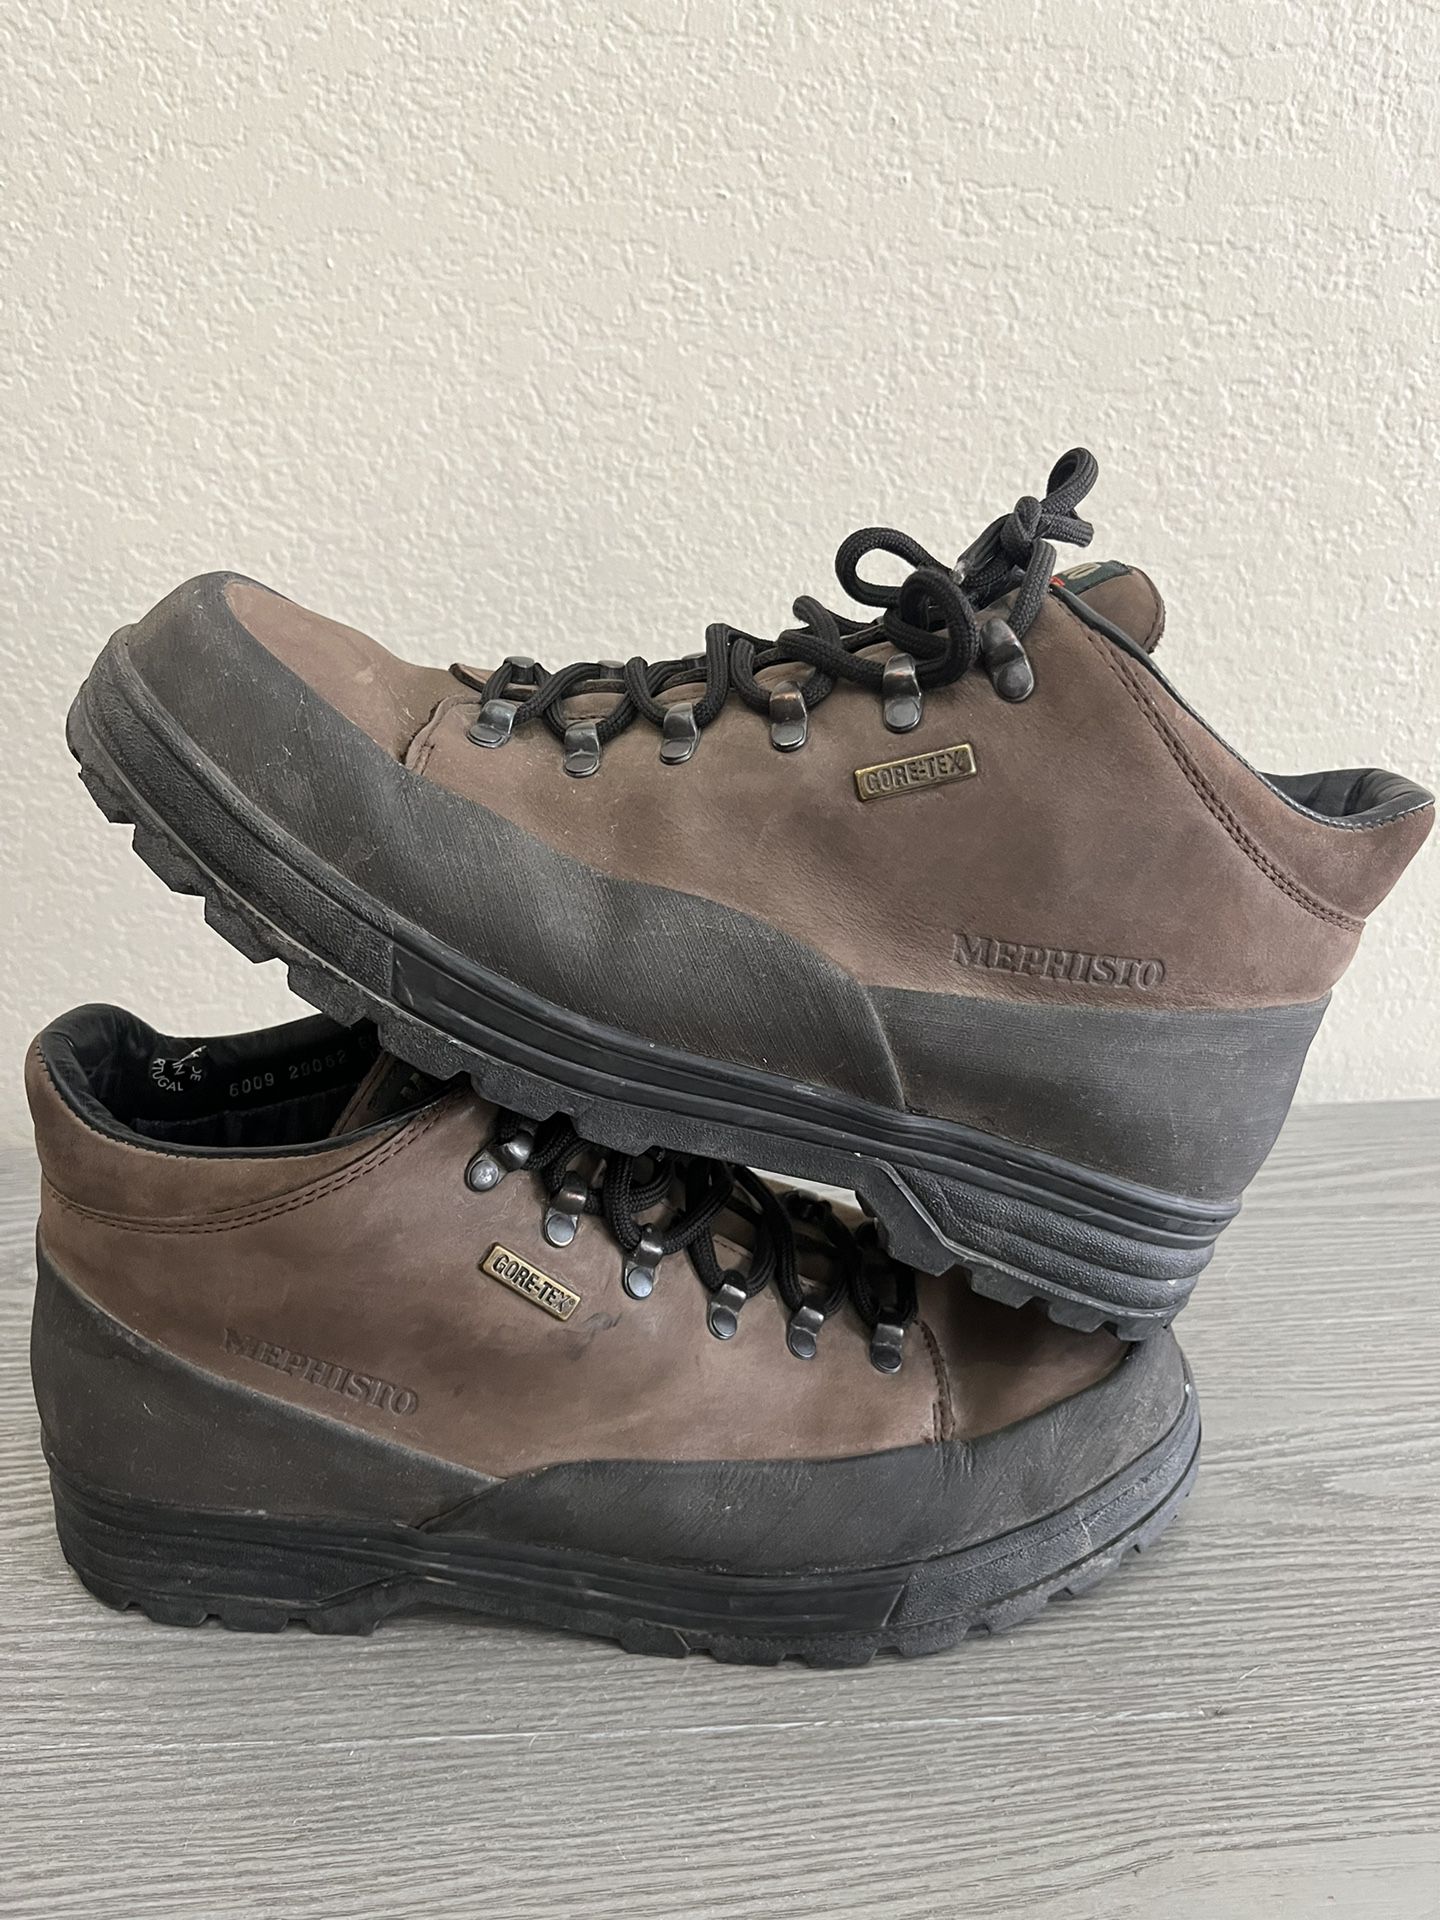 Mephisto Slacker Goretex Hiking Outdoor Brown Black Boots Men’s Size 11